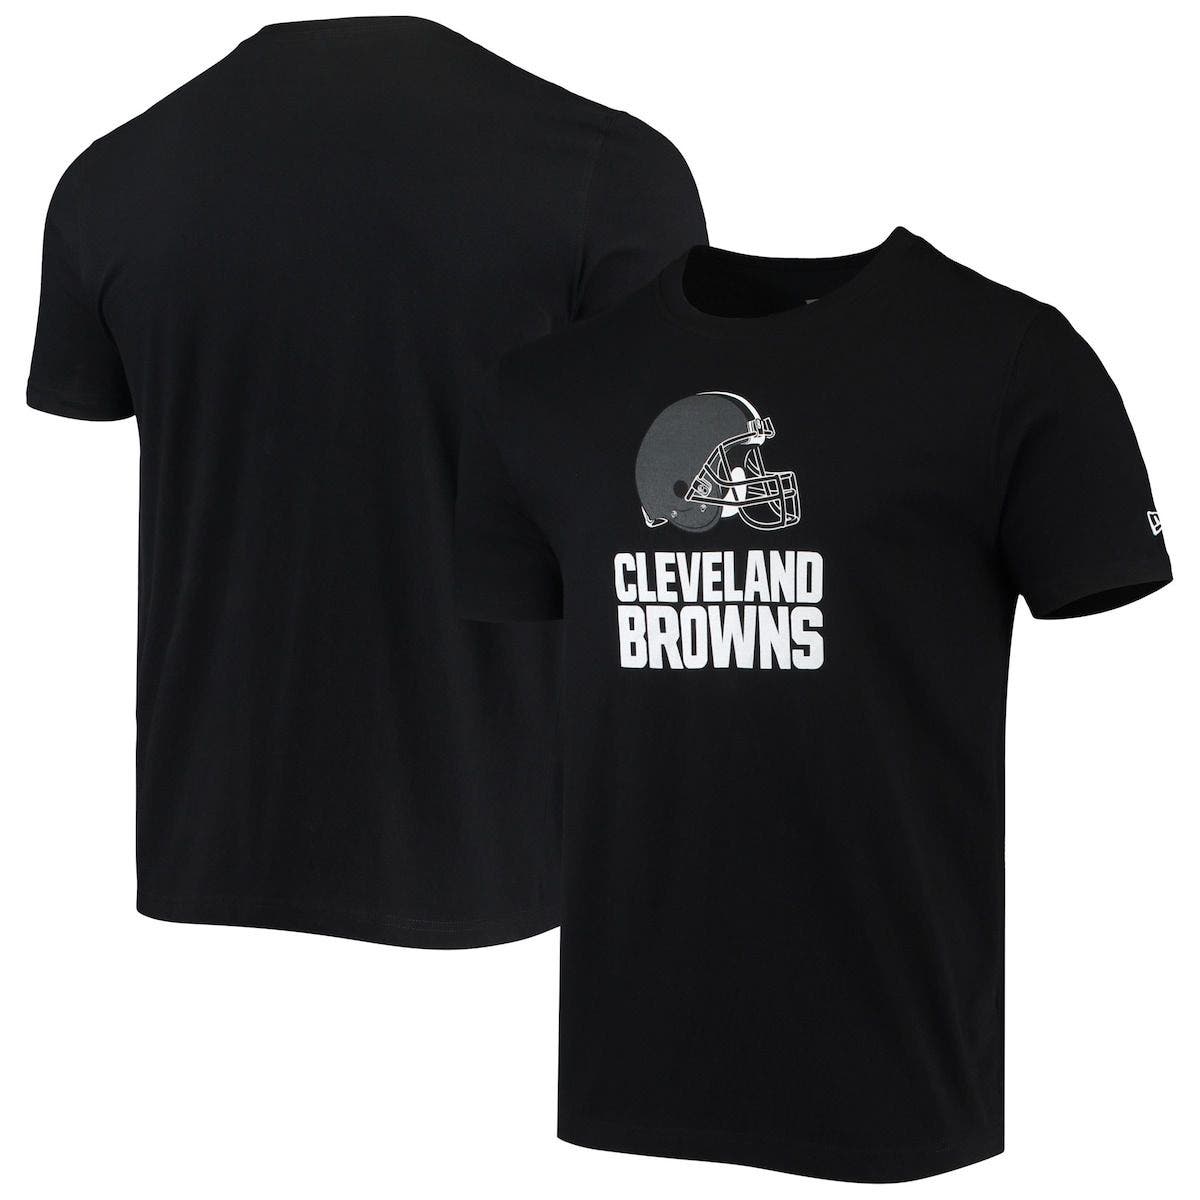 T-Shirts  The Cleveland Closet